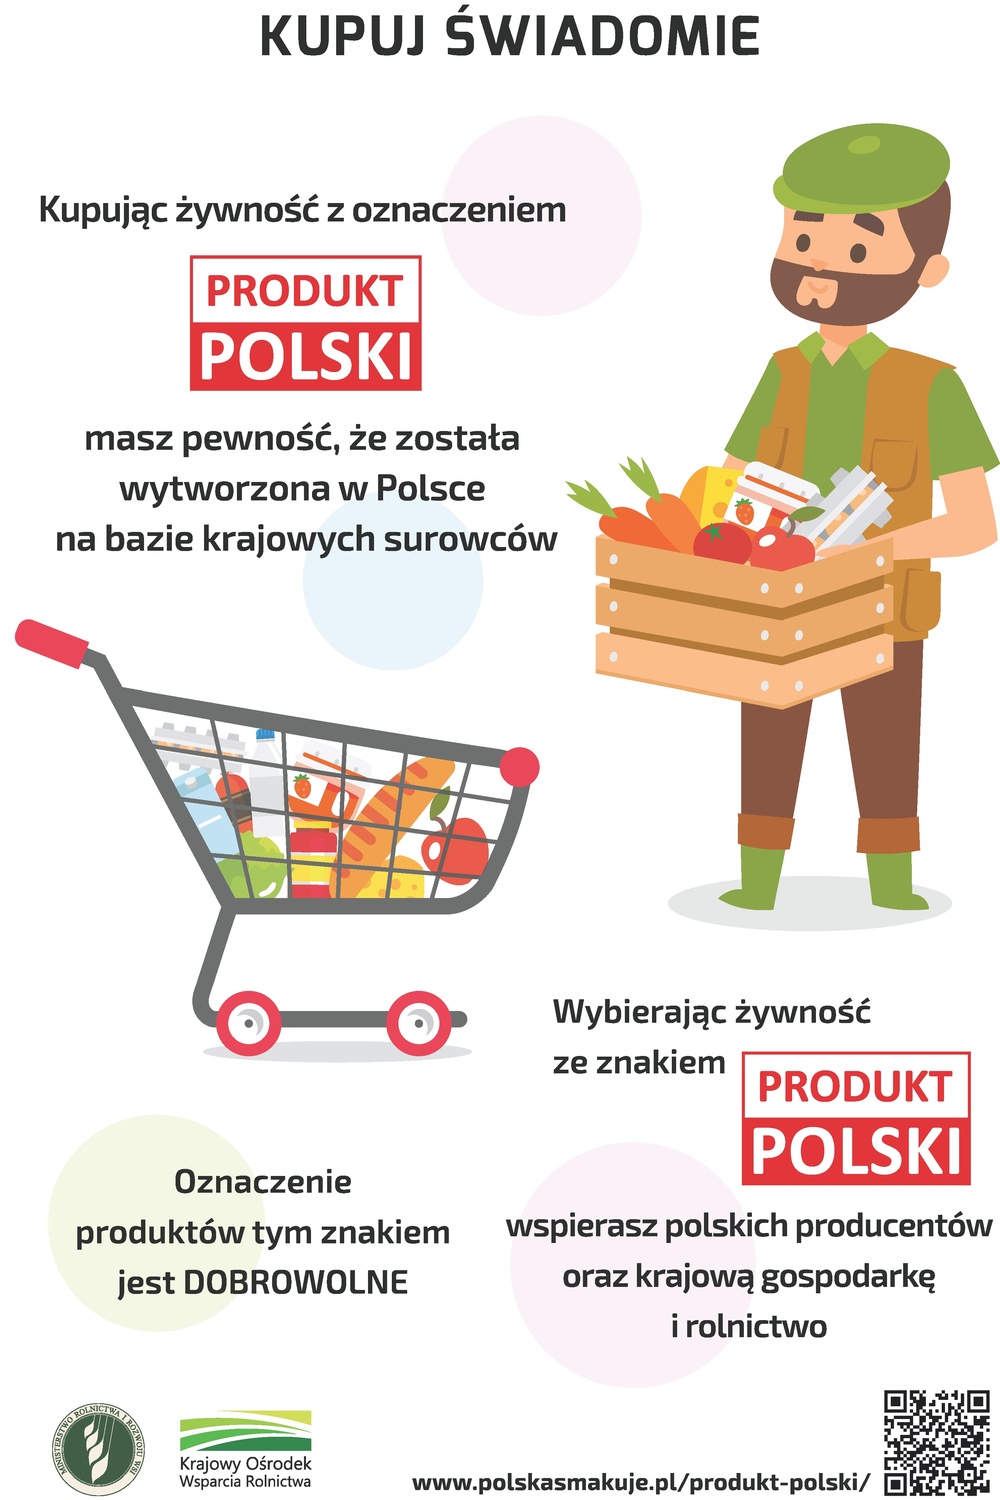 Kampania "Kupuj świadomie - Produkt polski"